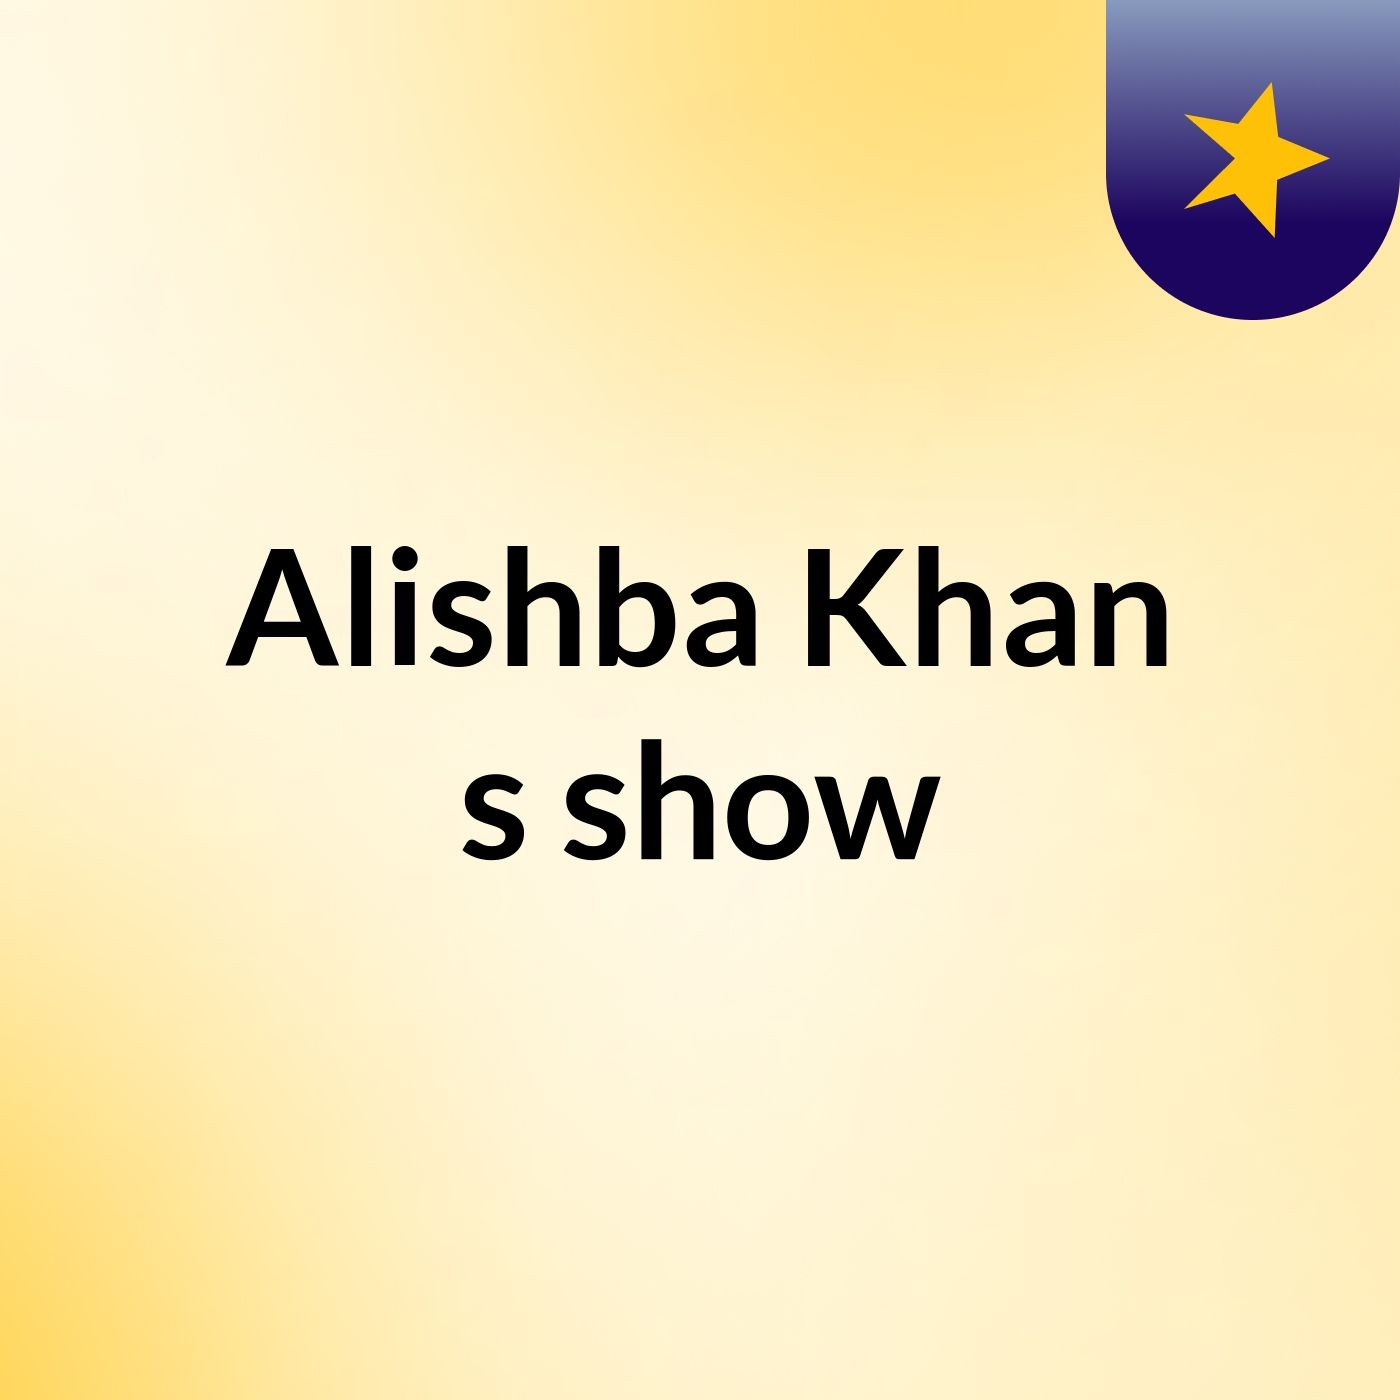 Alishba Khan's show